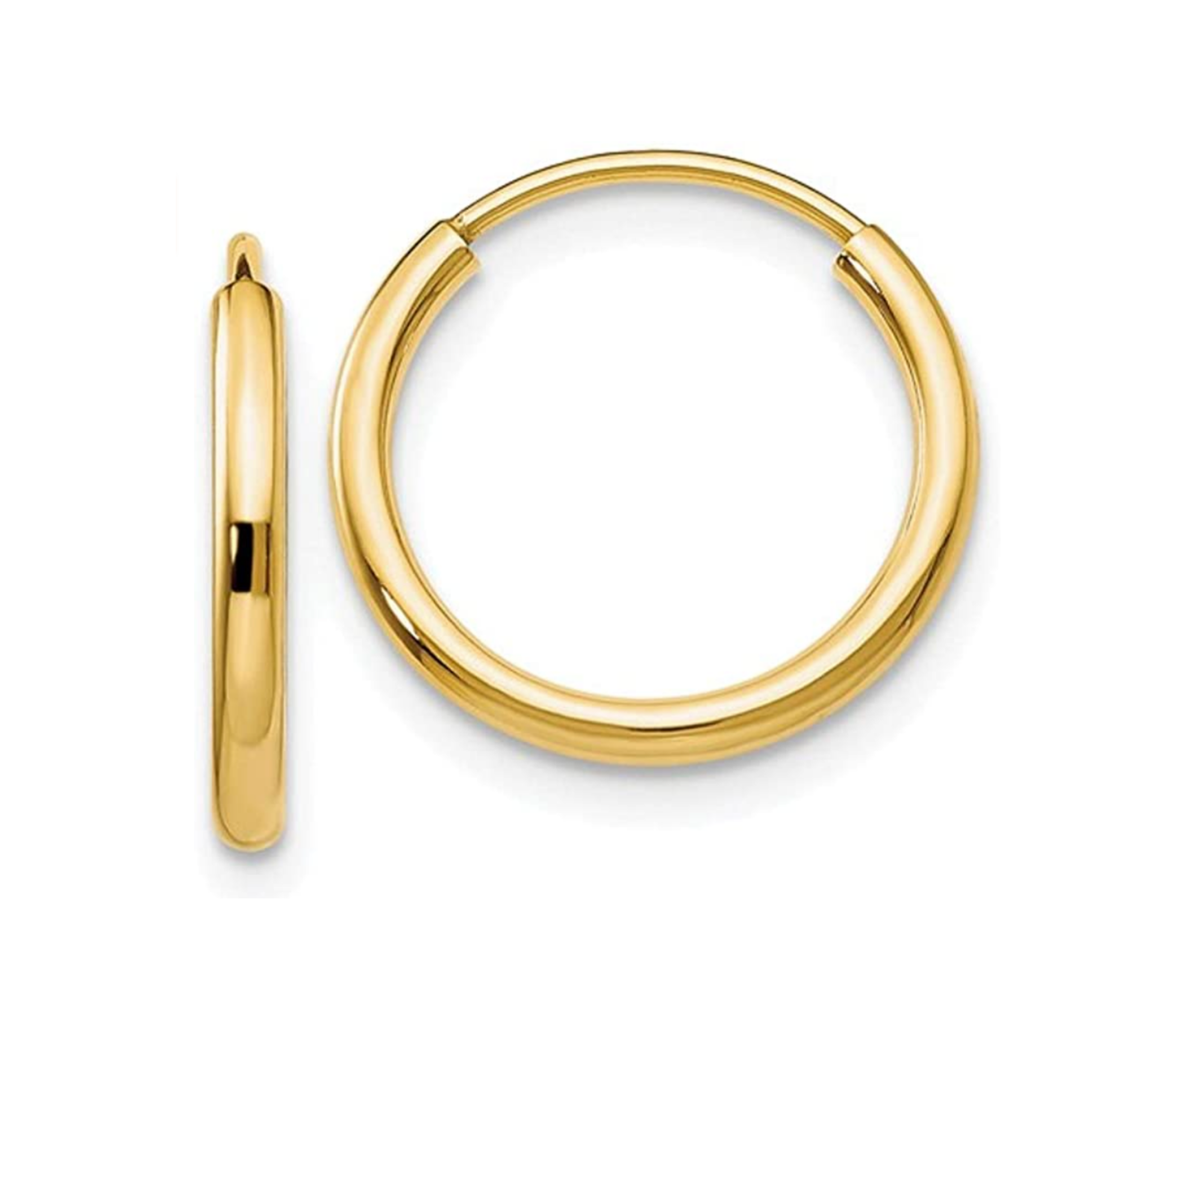 Gold classic hoop earrings | Shop Today. Get it Tomorrow! | takealot.com